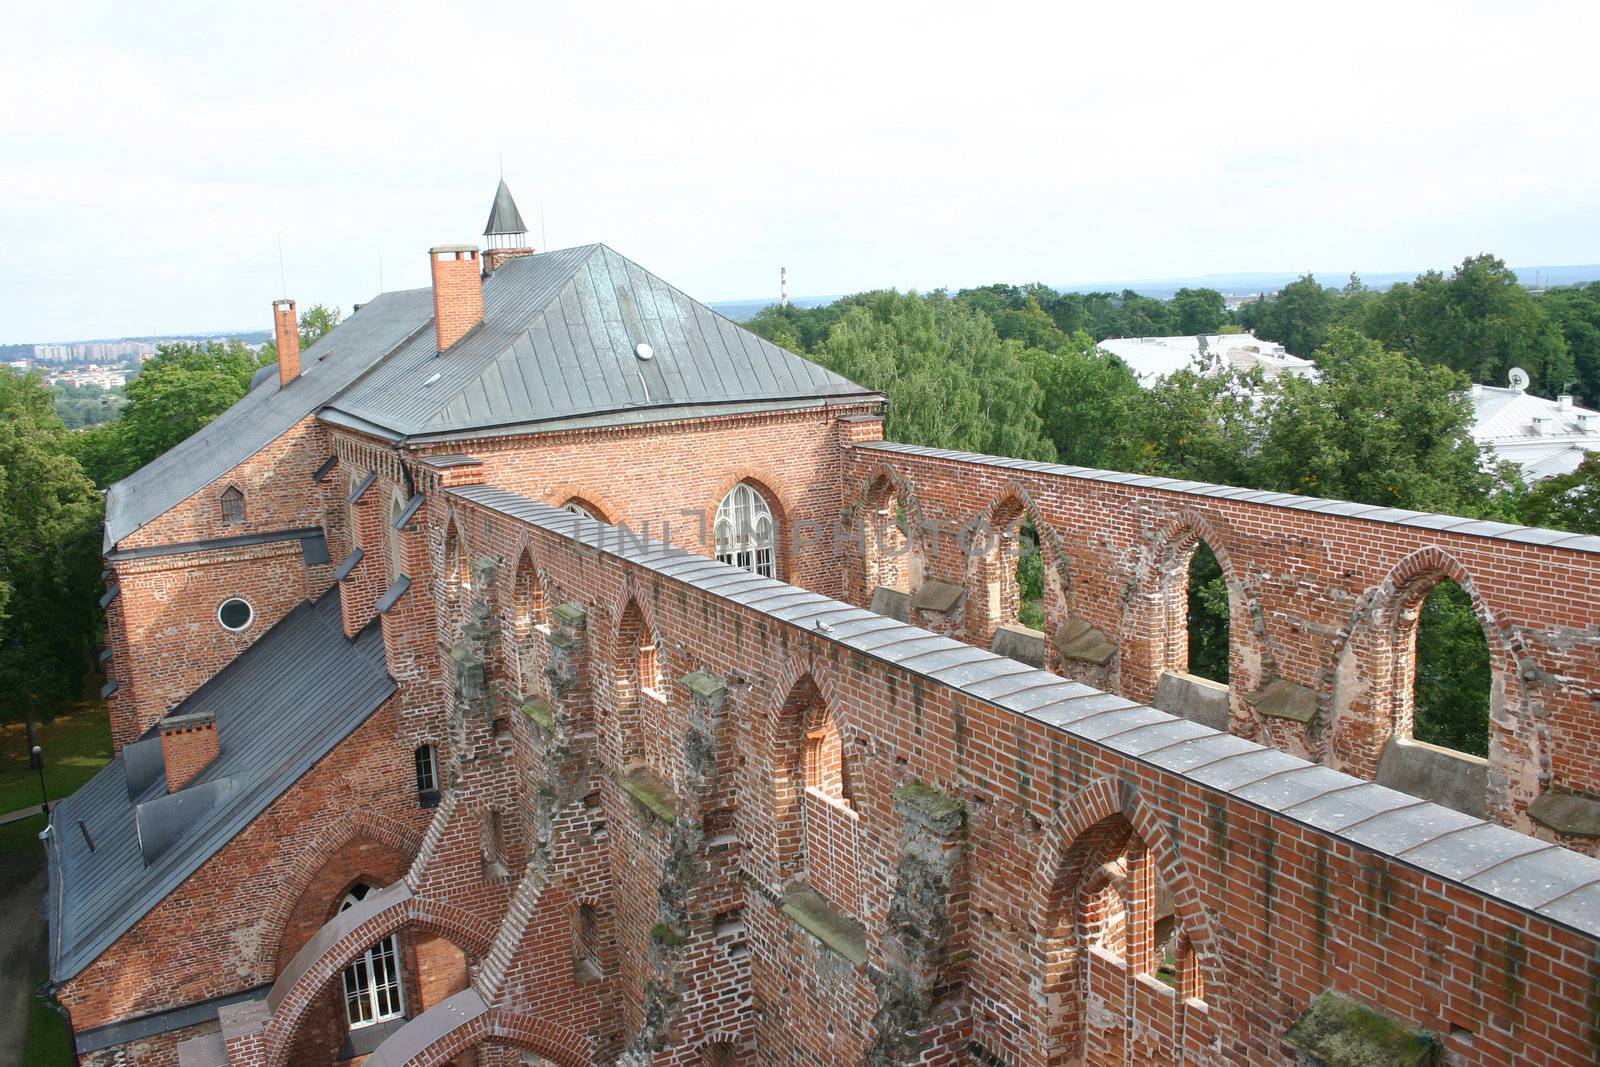 Fortress, cities of Tartu, Estonia by AlexandrePavlov